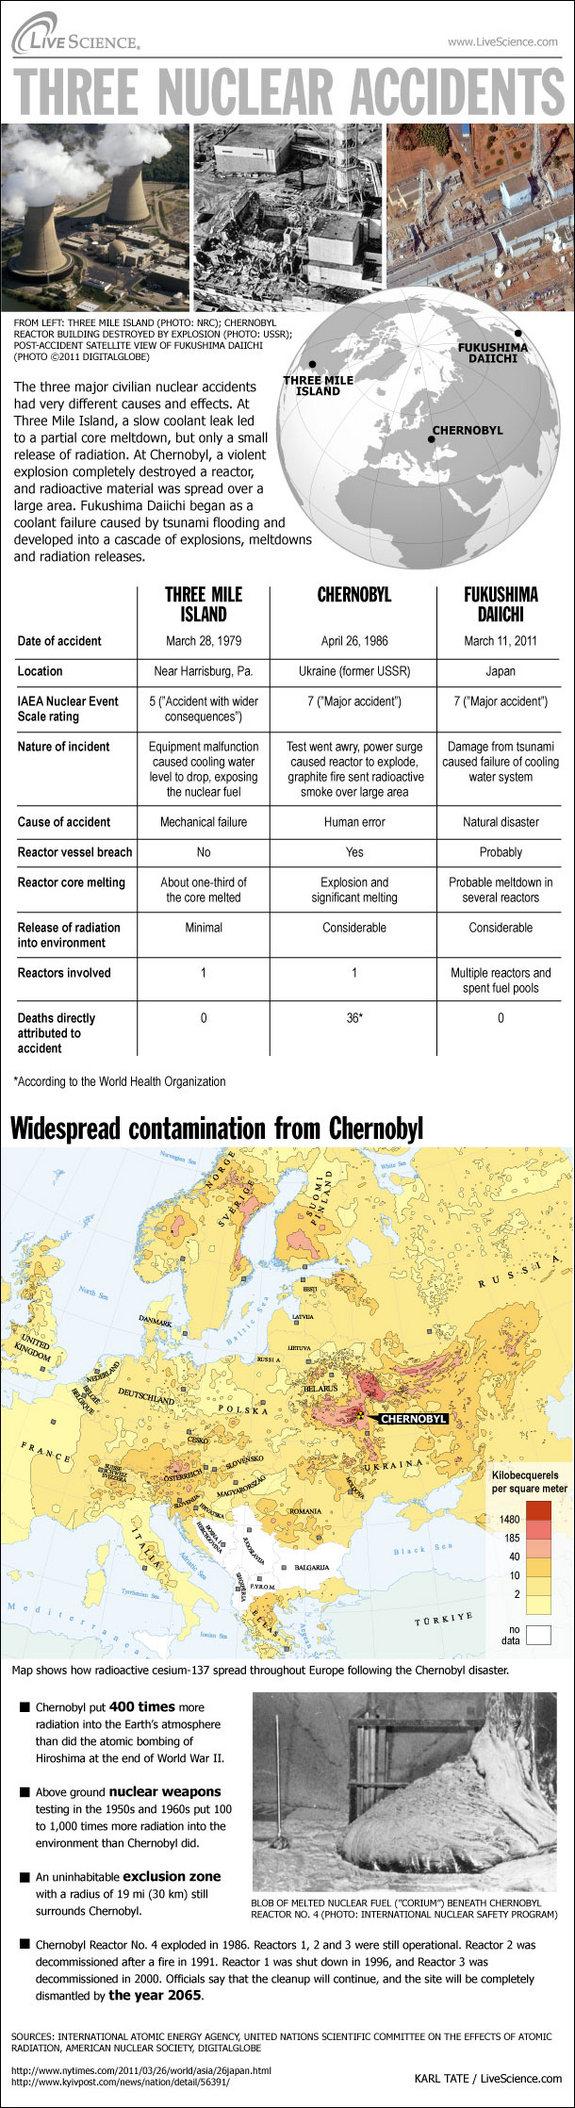  Chernobyl disaster infographic